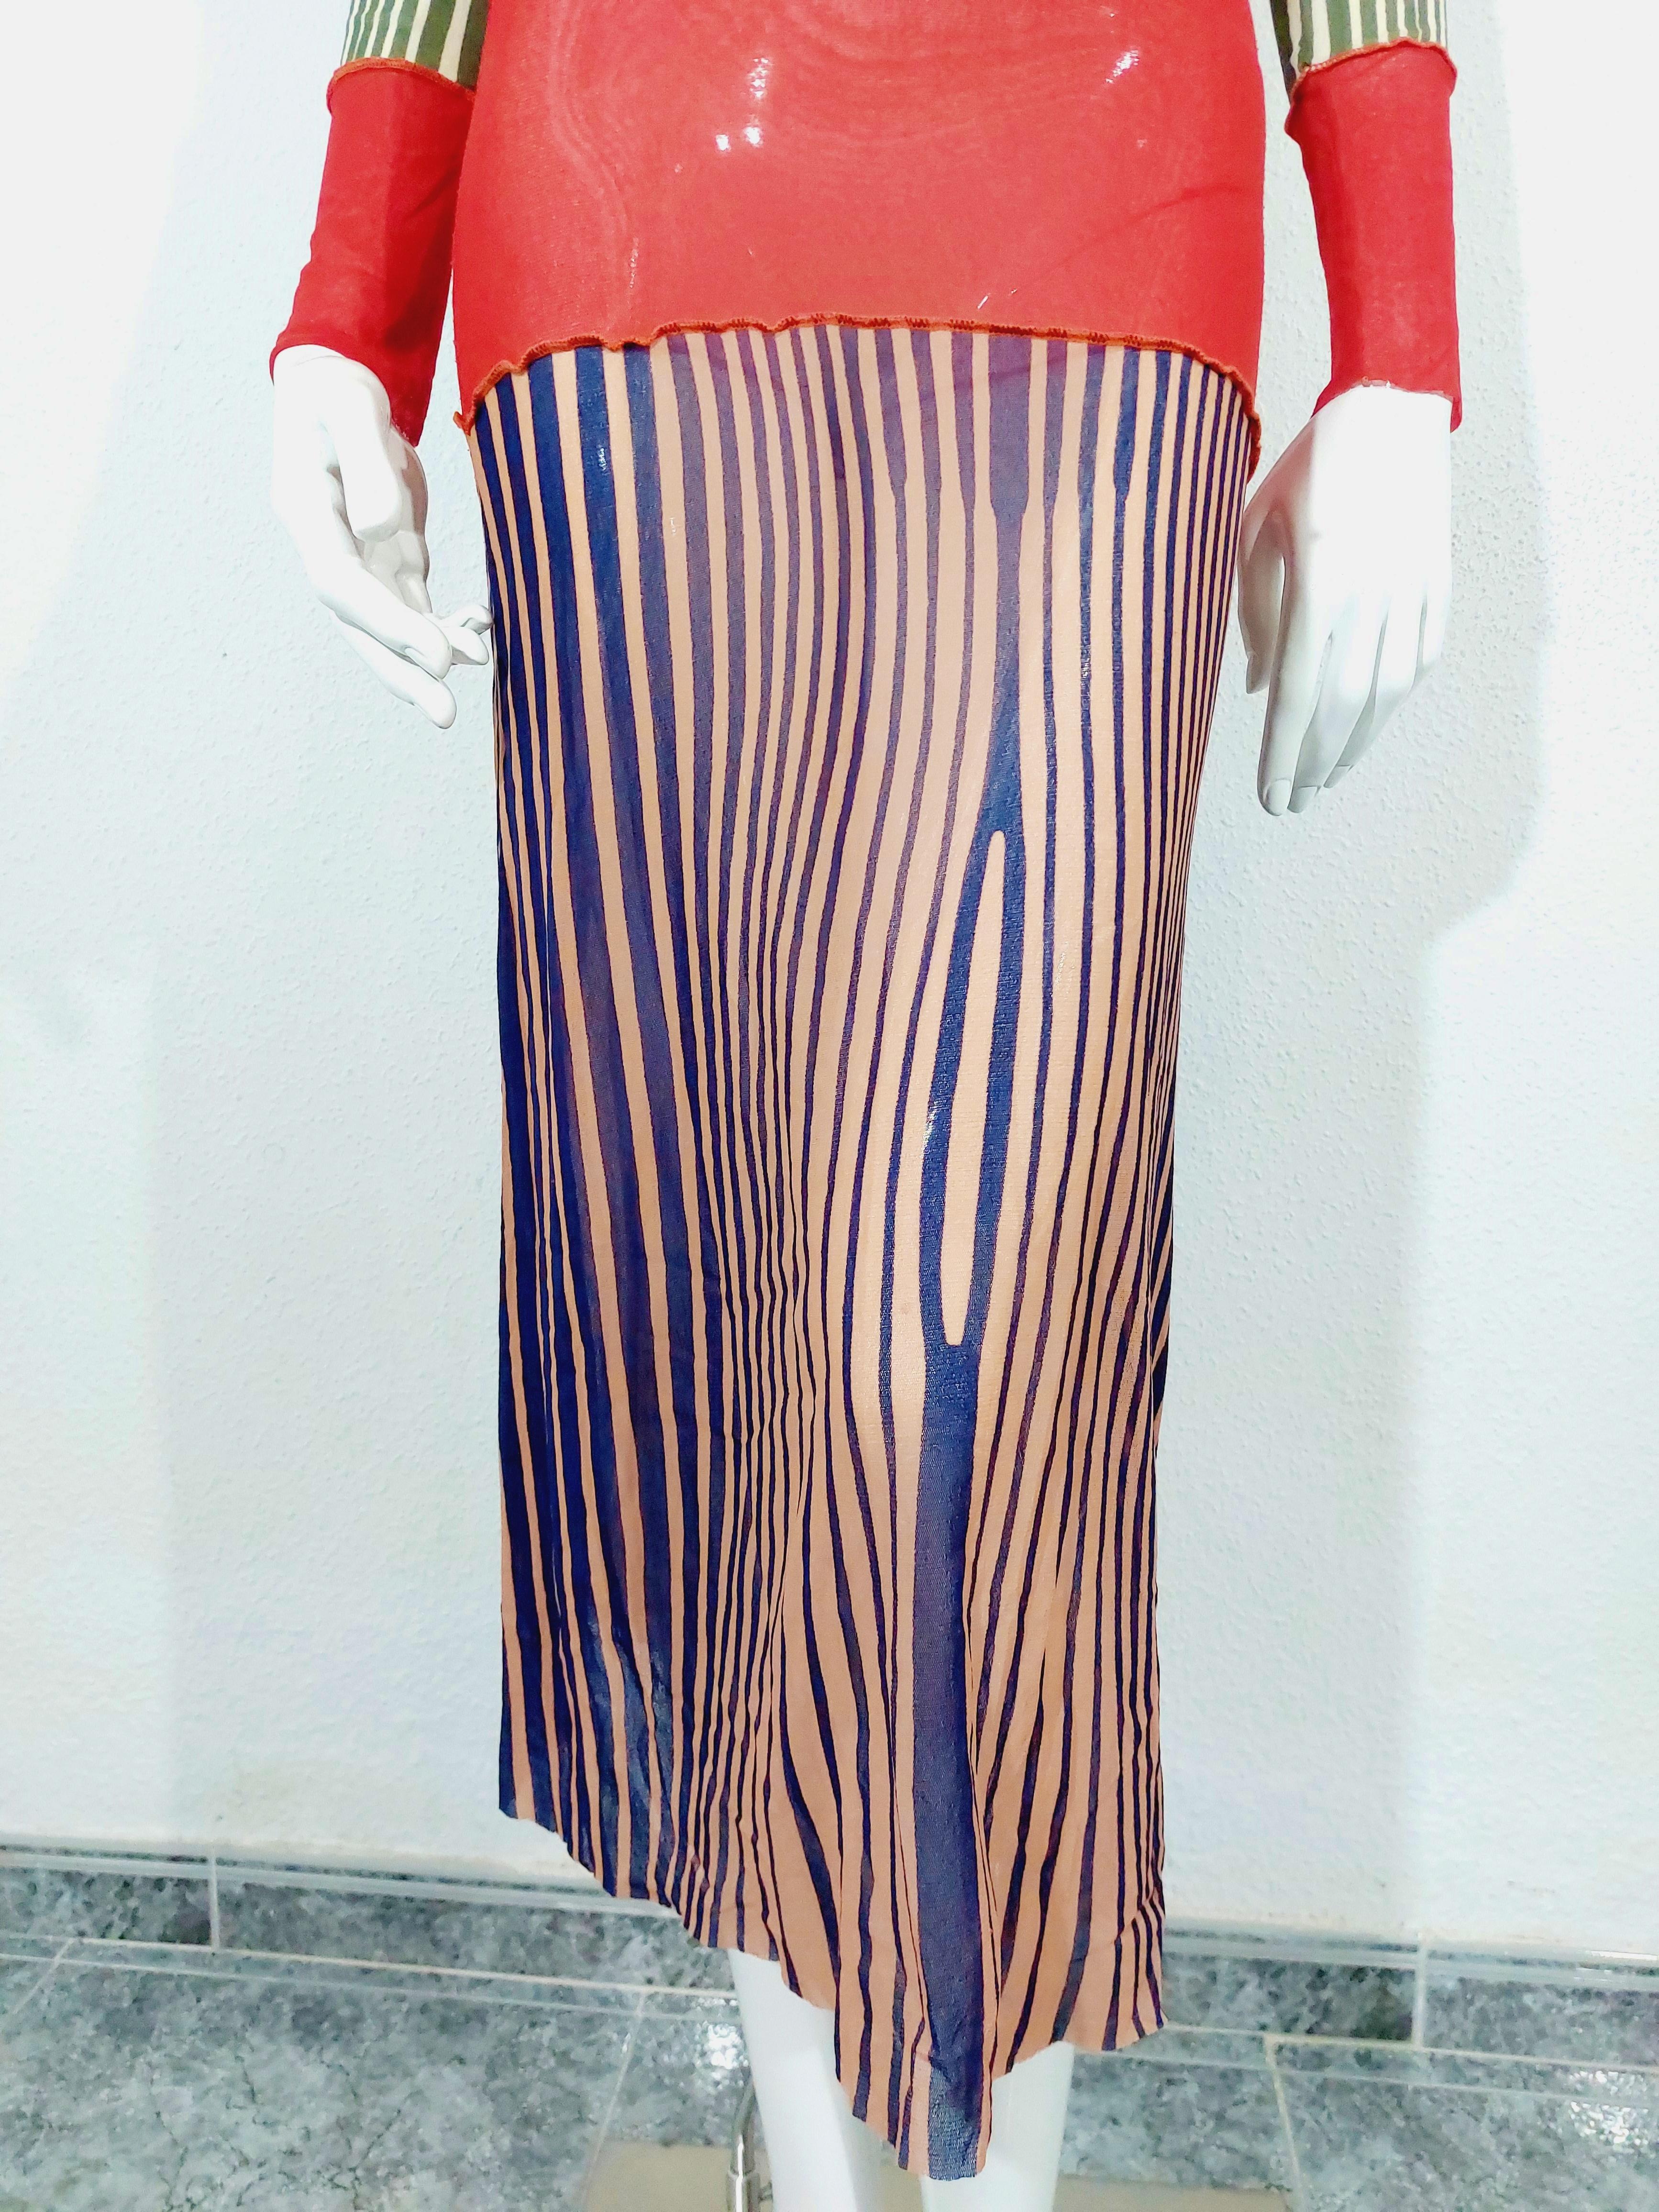 Jean Paul Gaultier Optical Illusion Nude Ethic Trompe l'oeil Vanessa Guide Dress For Sale 2